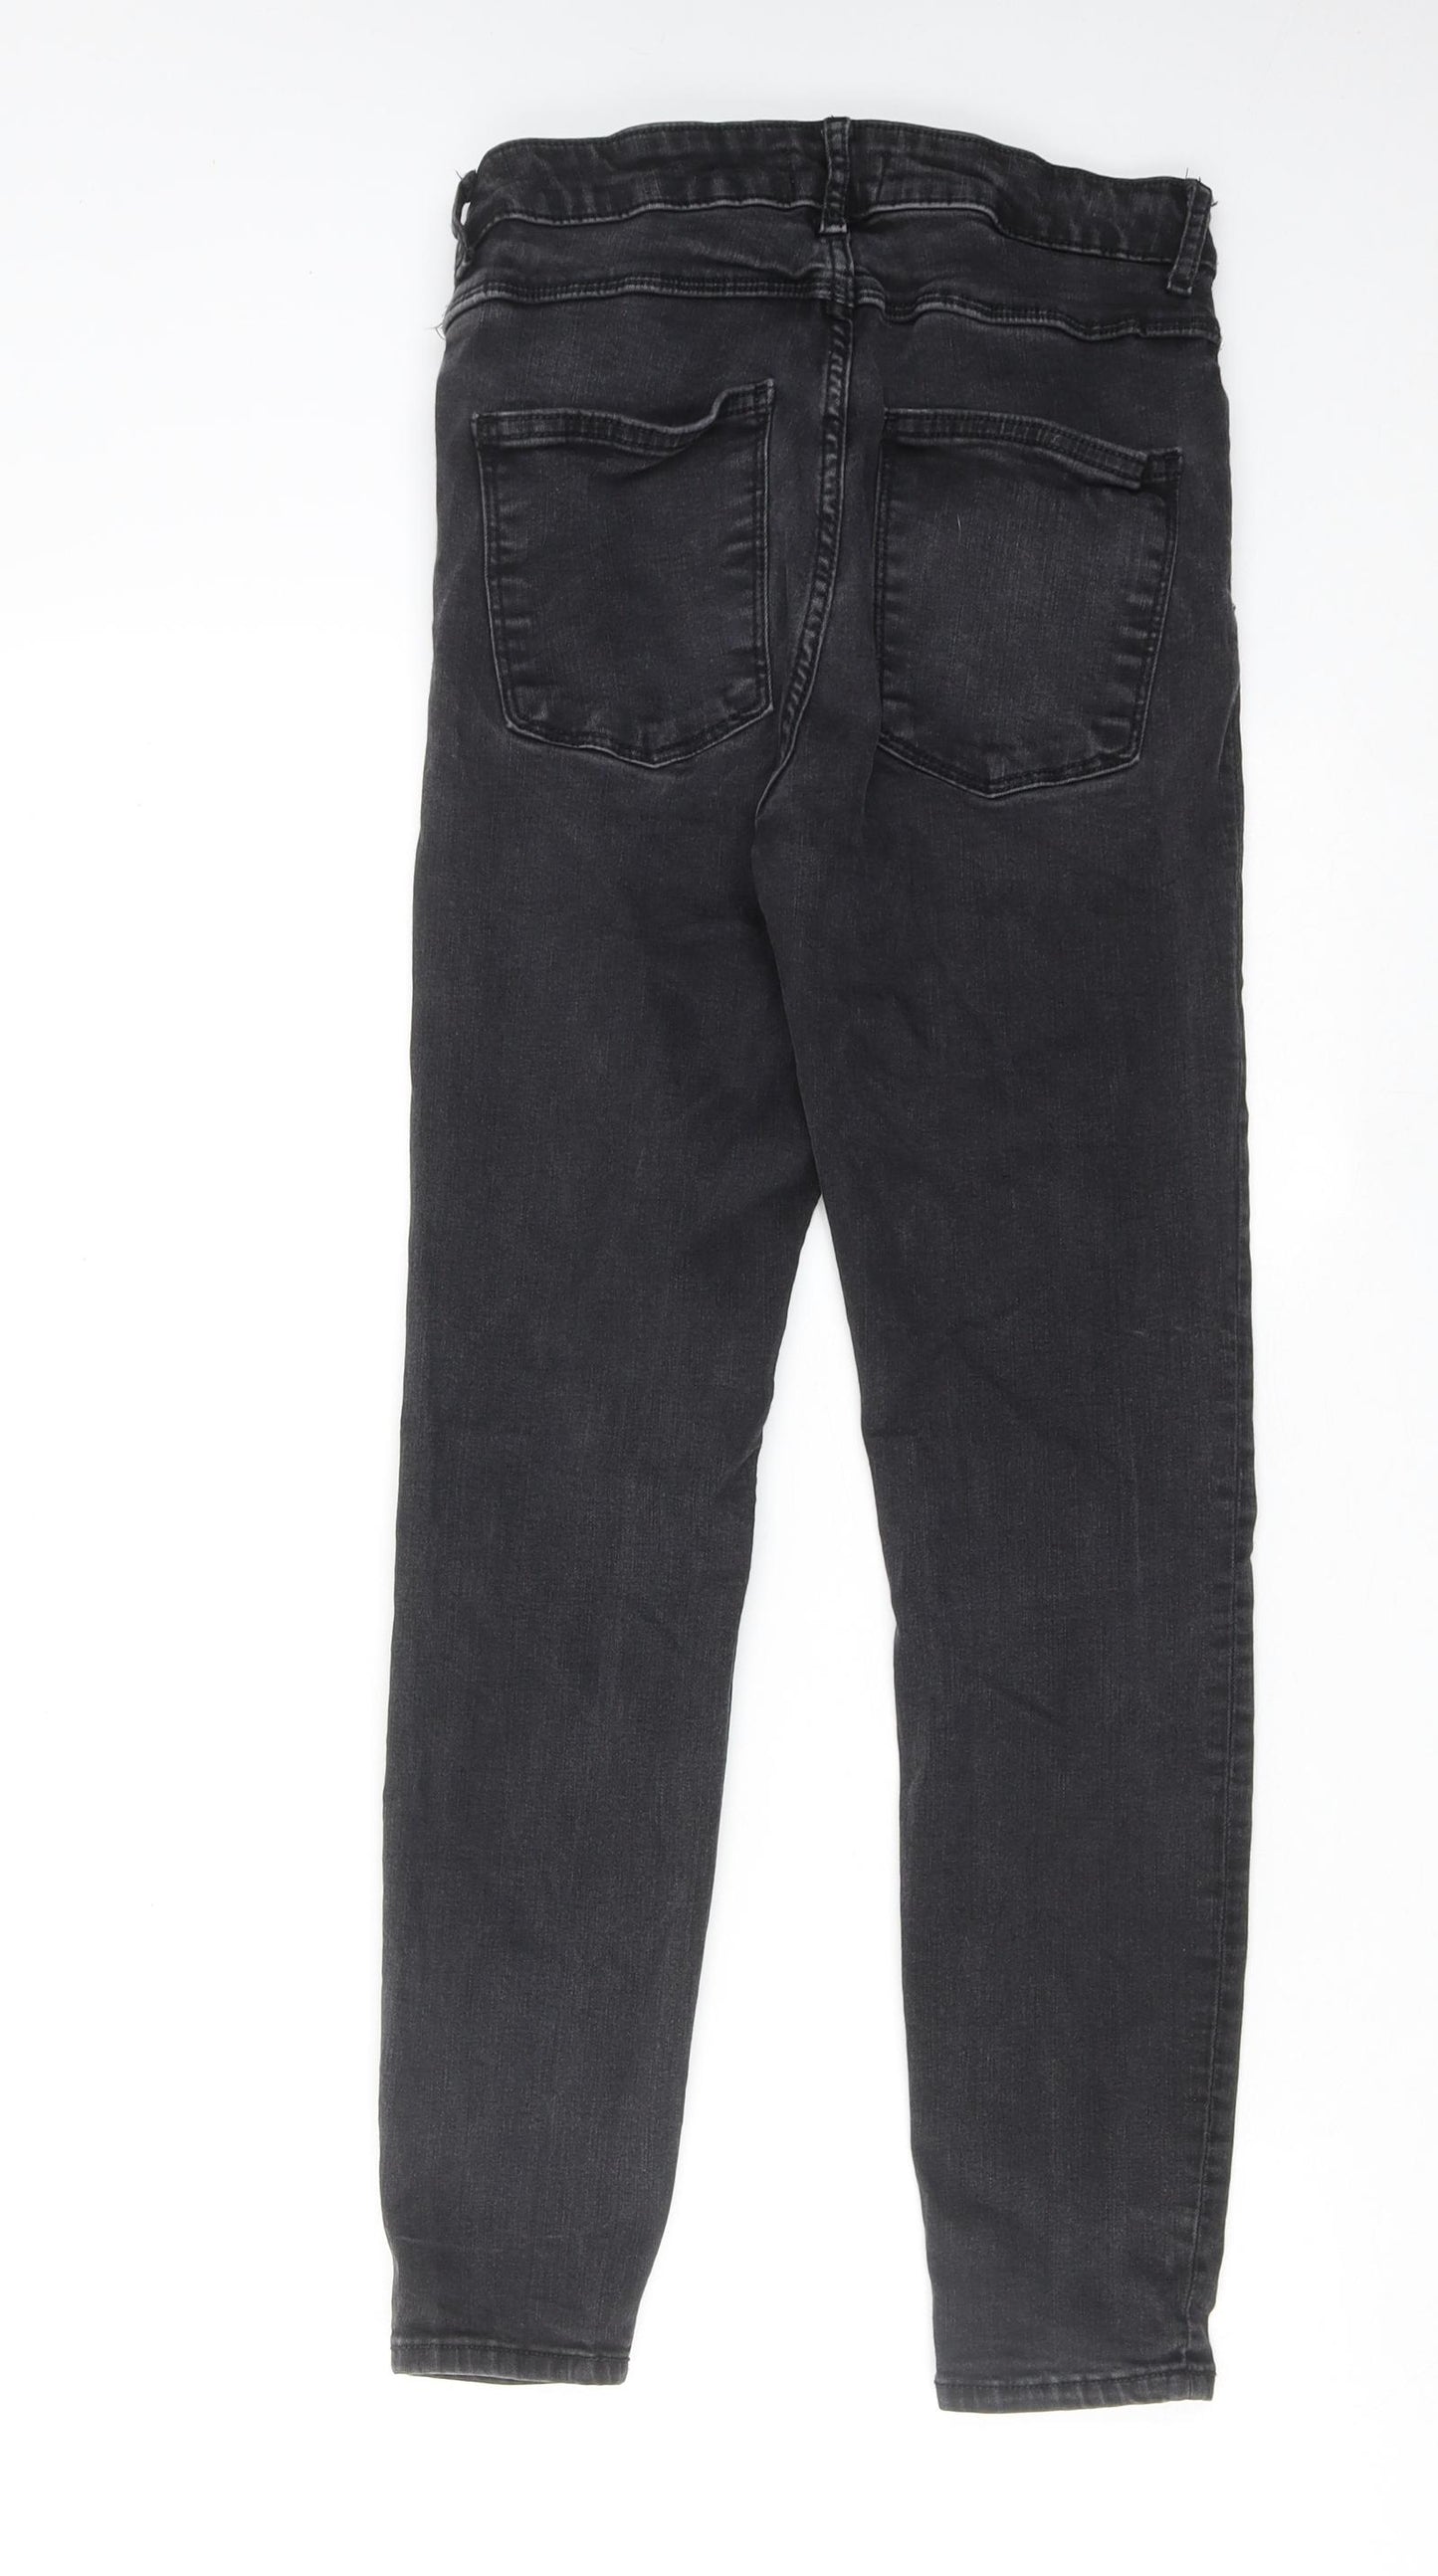 Zara Womens Black Cotton Skinny Jeans Size 26 in Regular Button